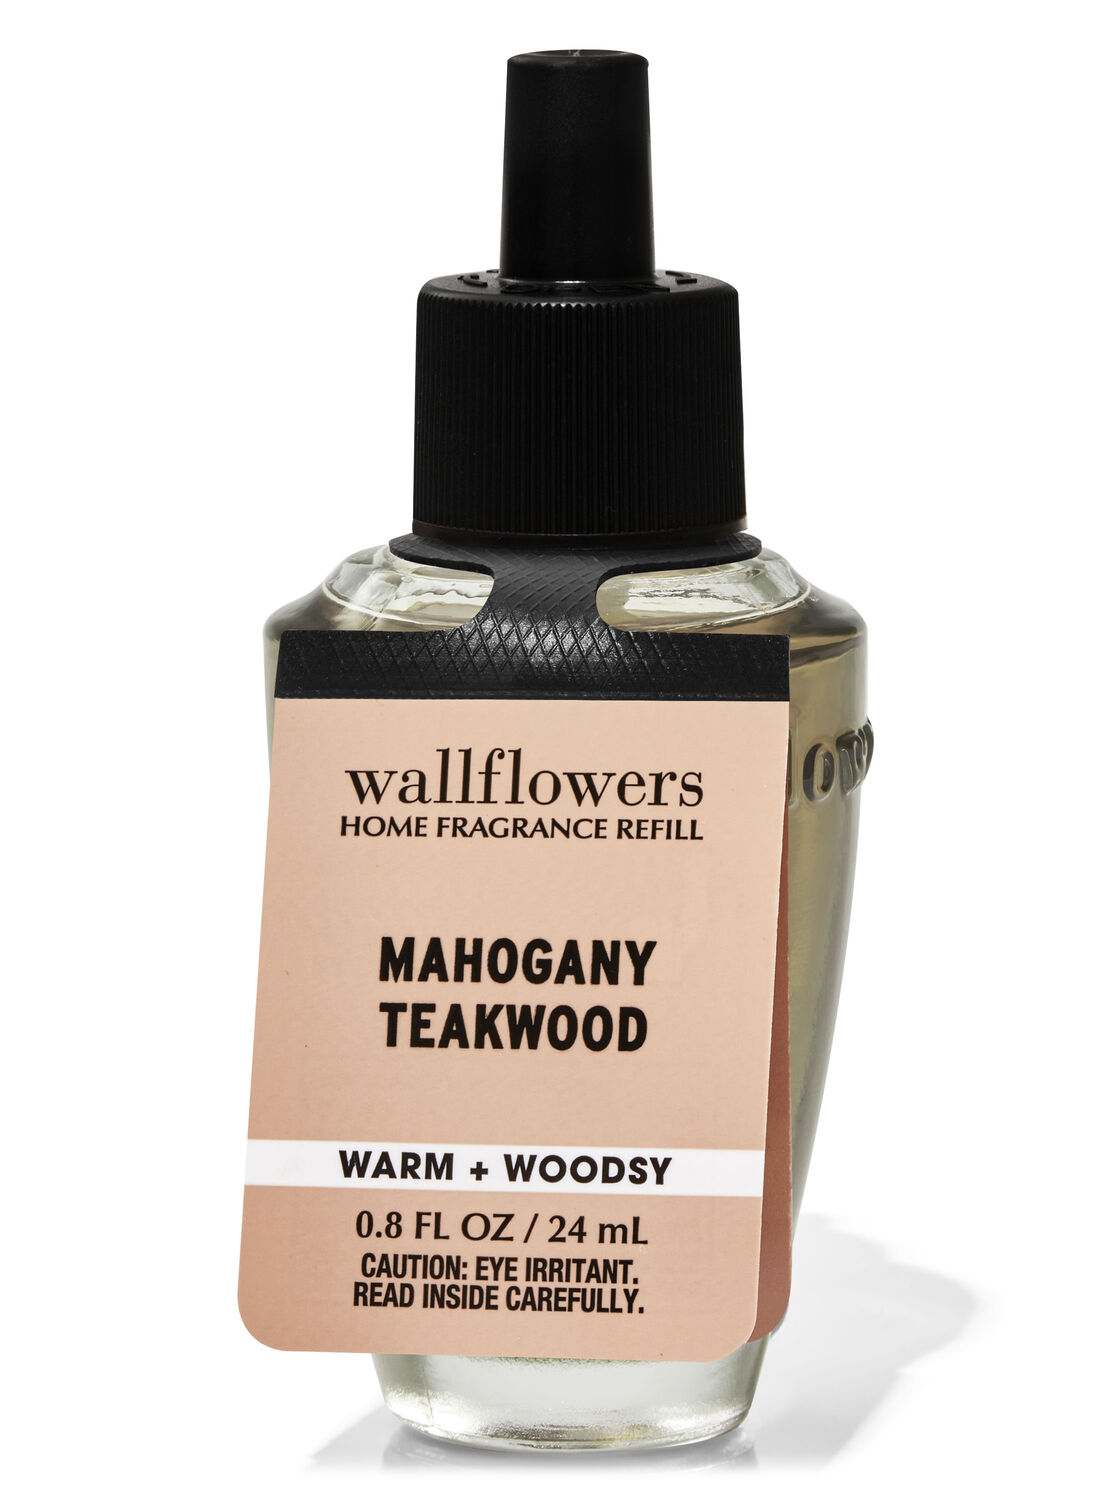 5) Bath and Body Works MAHOGANY TEAKWOOD Car Fragrance Refill *NEW